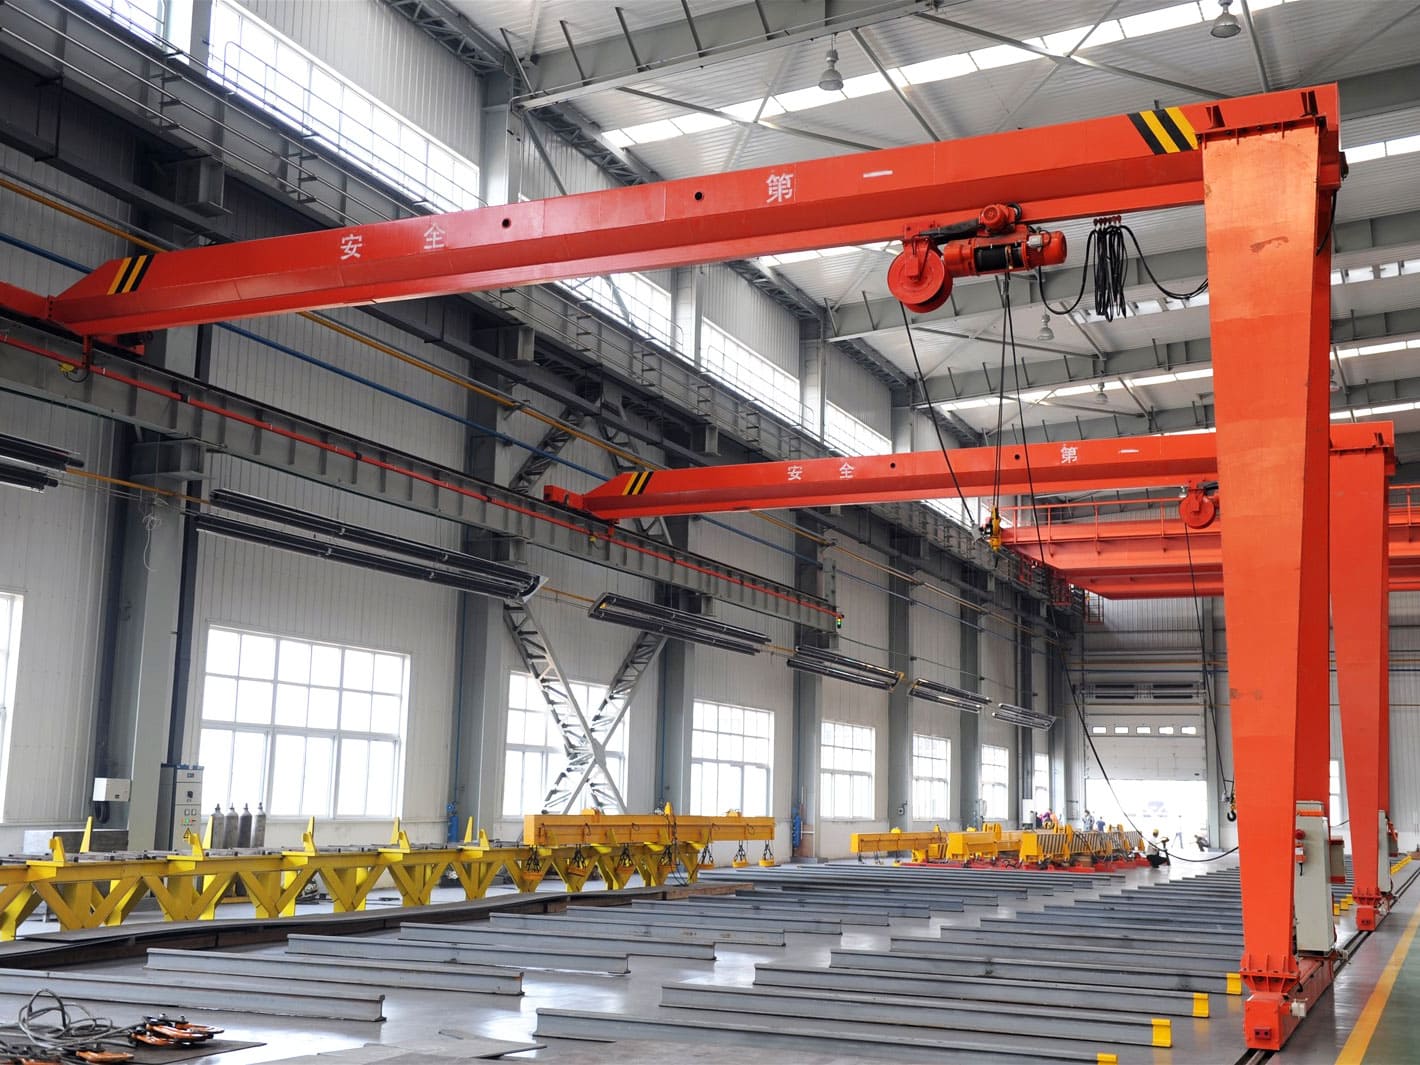 https://www.sevenoverheadcrane.com/project/semi-gantry-crane-serves-the-warehouse-in-peru/